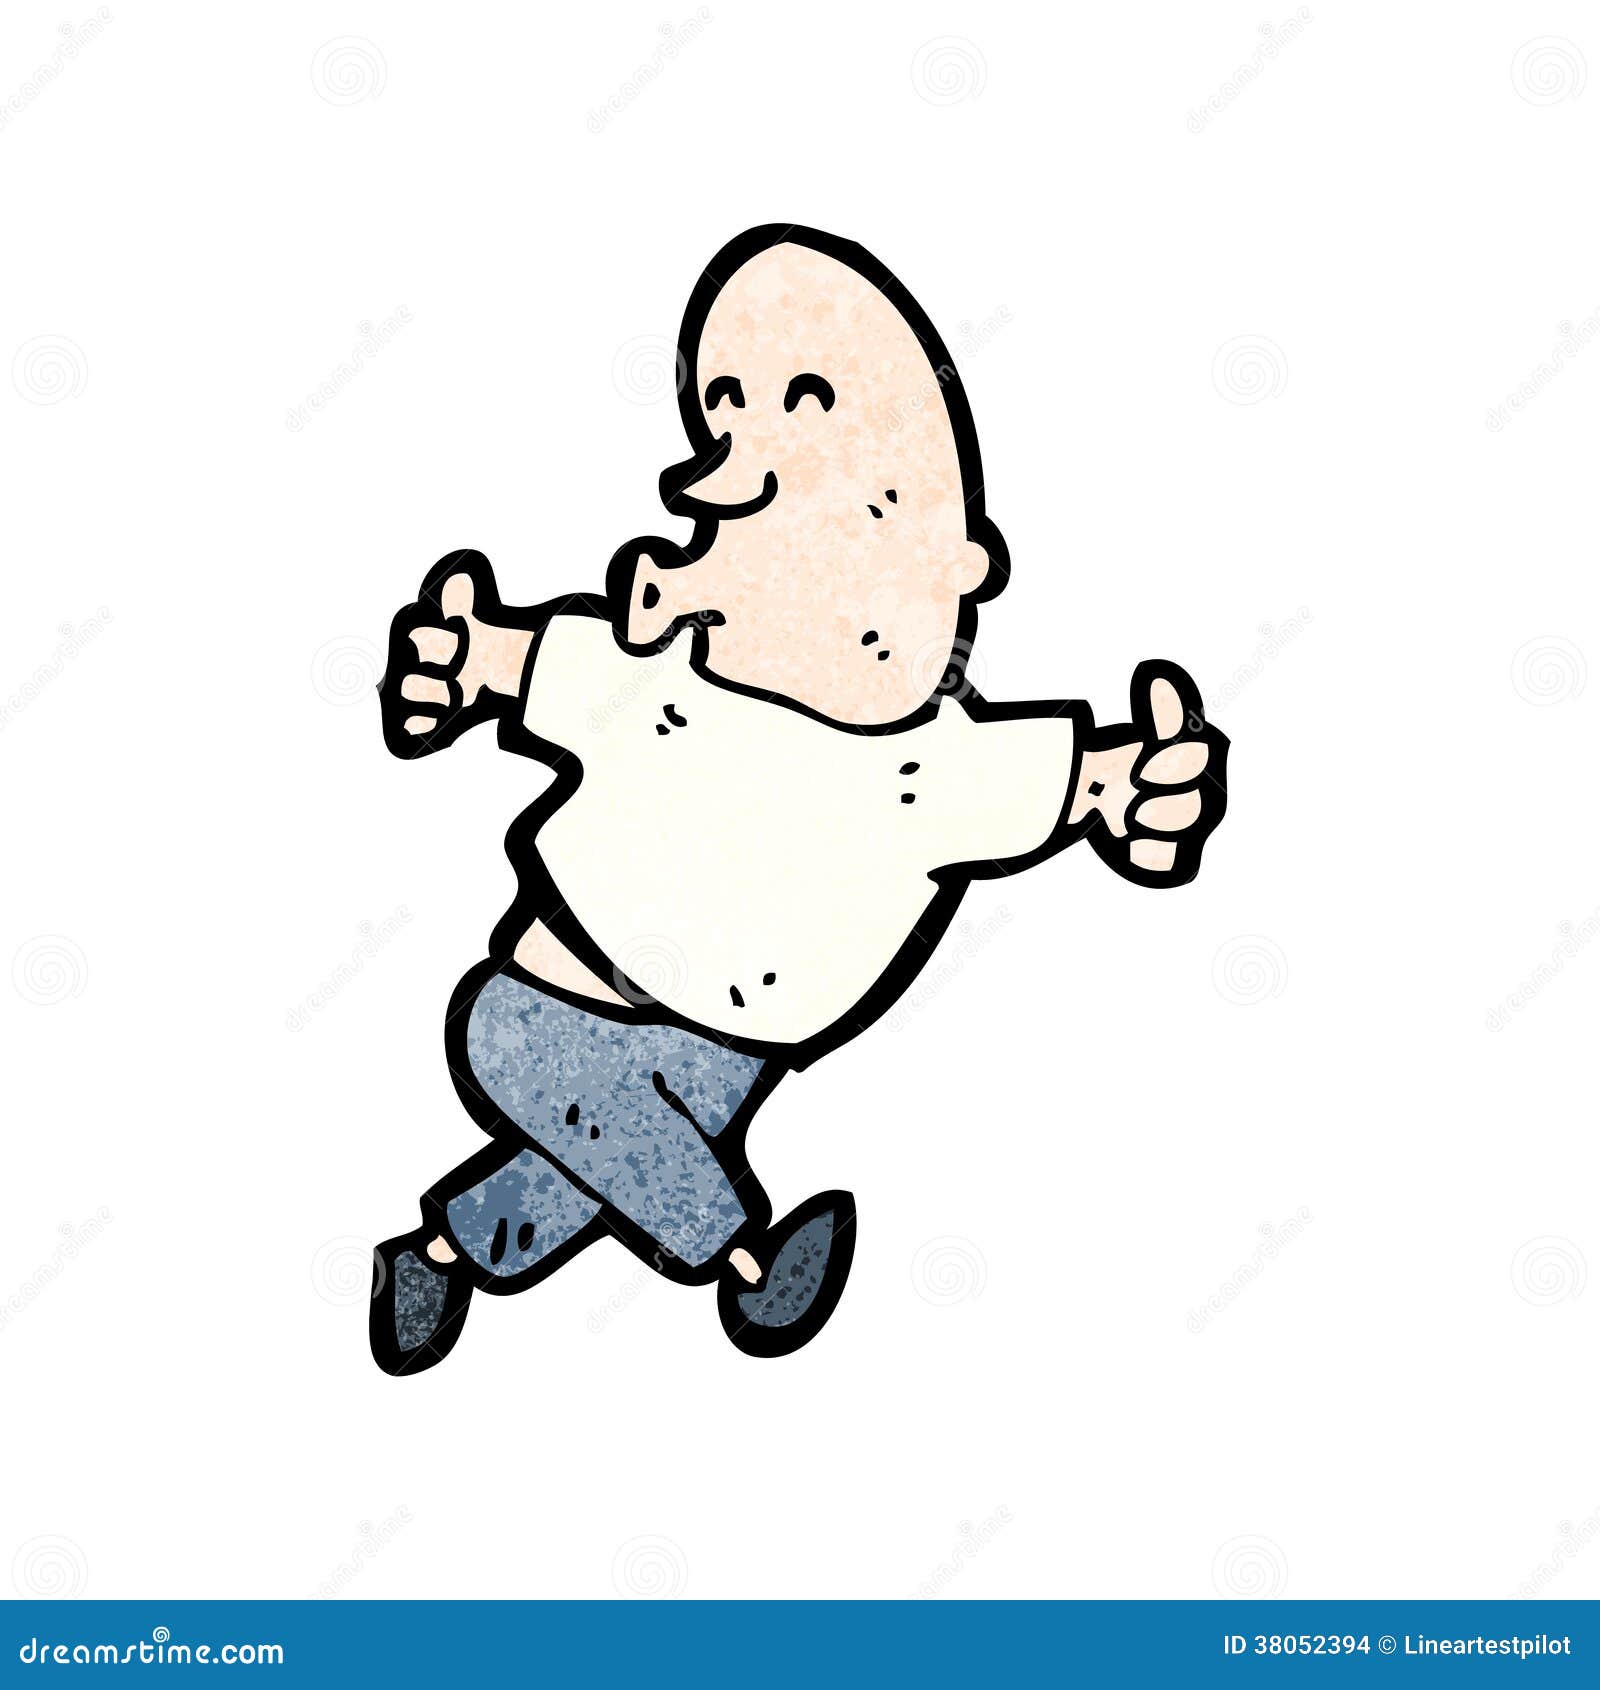 Cartoon bald man stock vector. Illustration of texture - 38052394